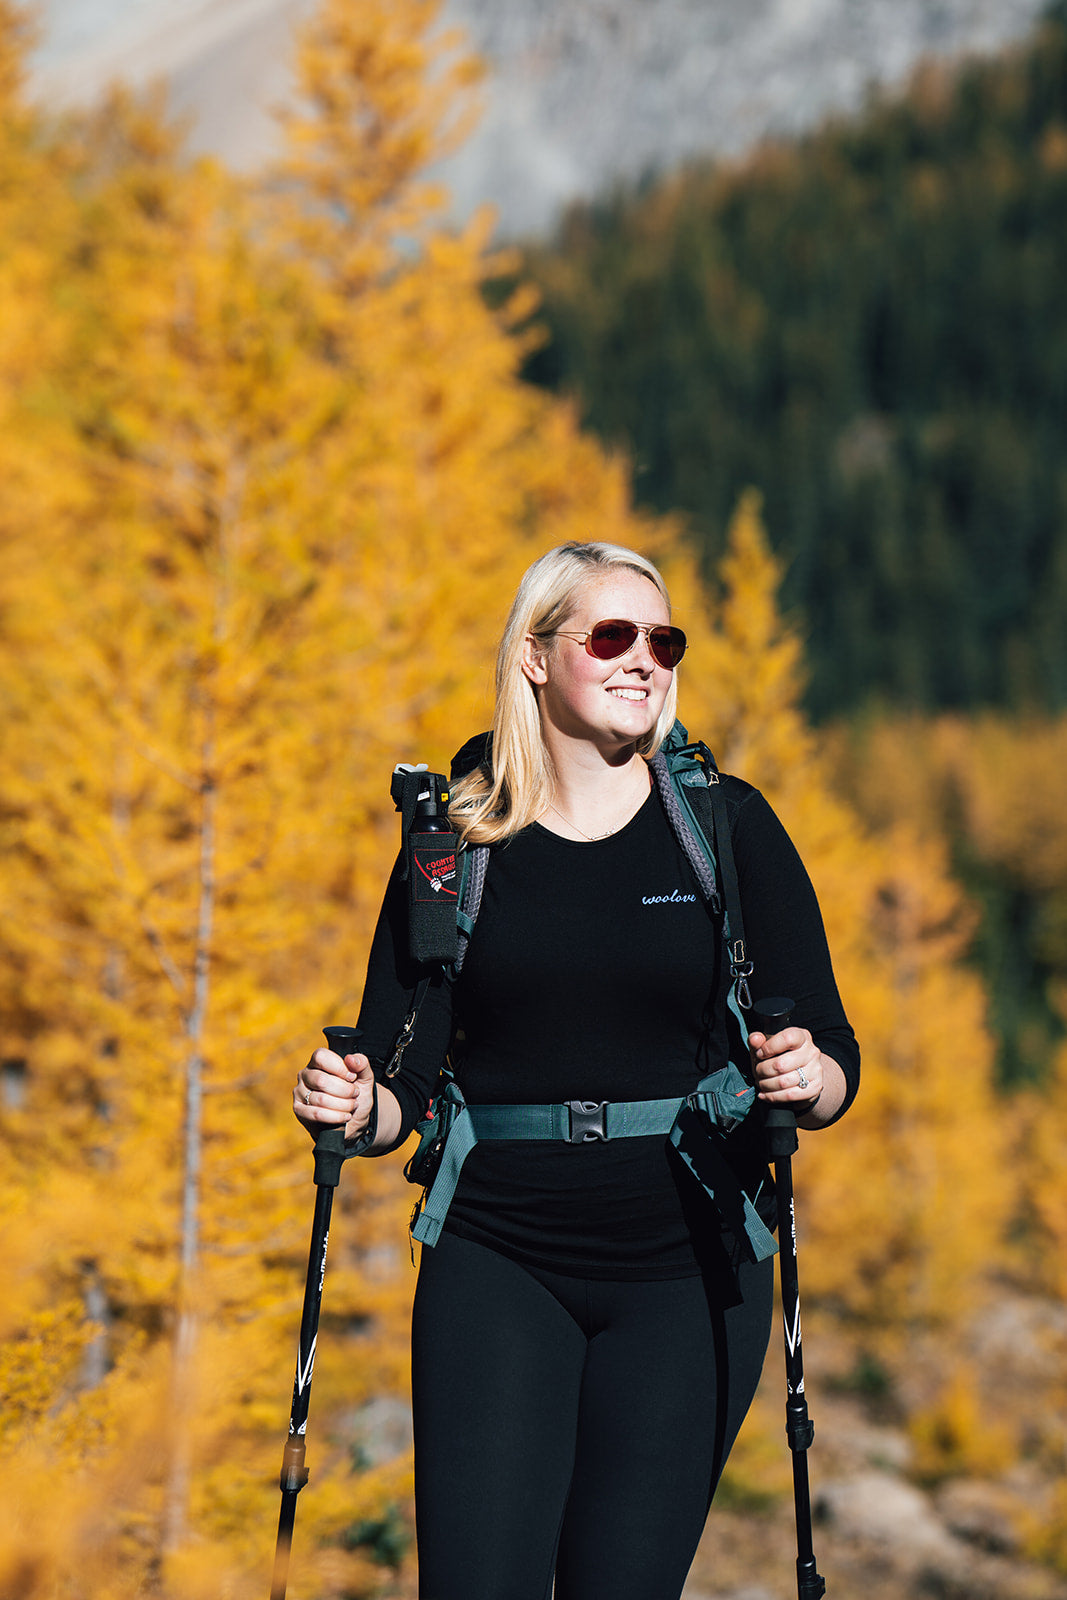 Women's Merino Outdoor & Hiking Clothes